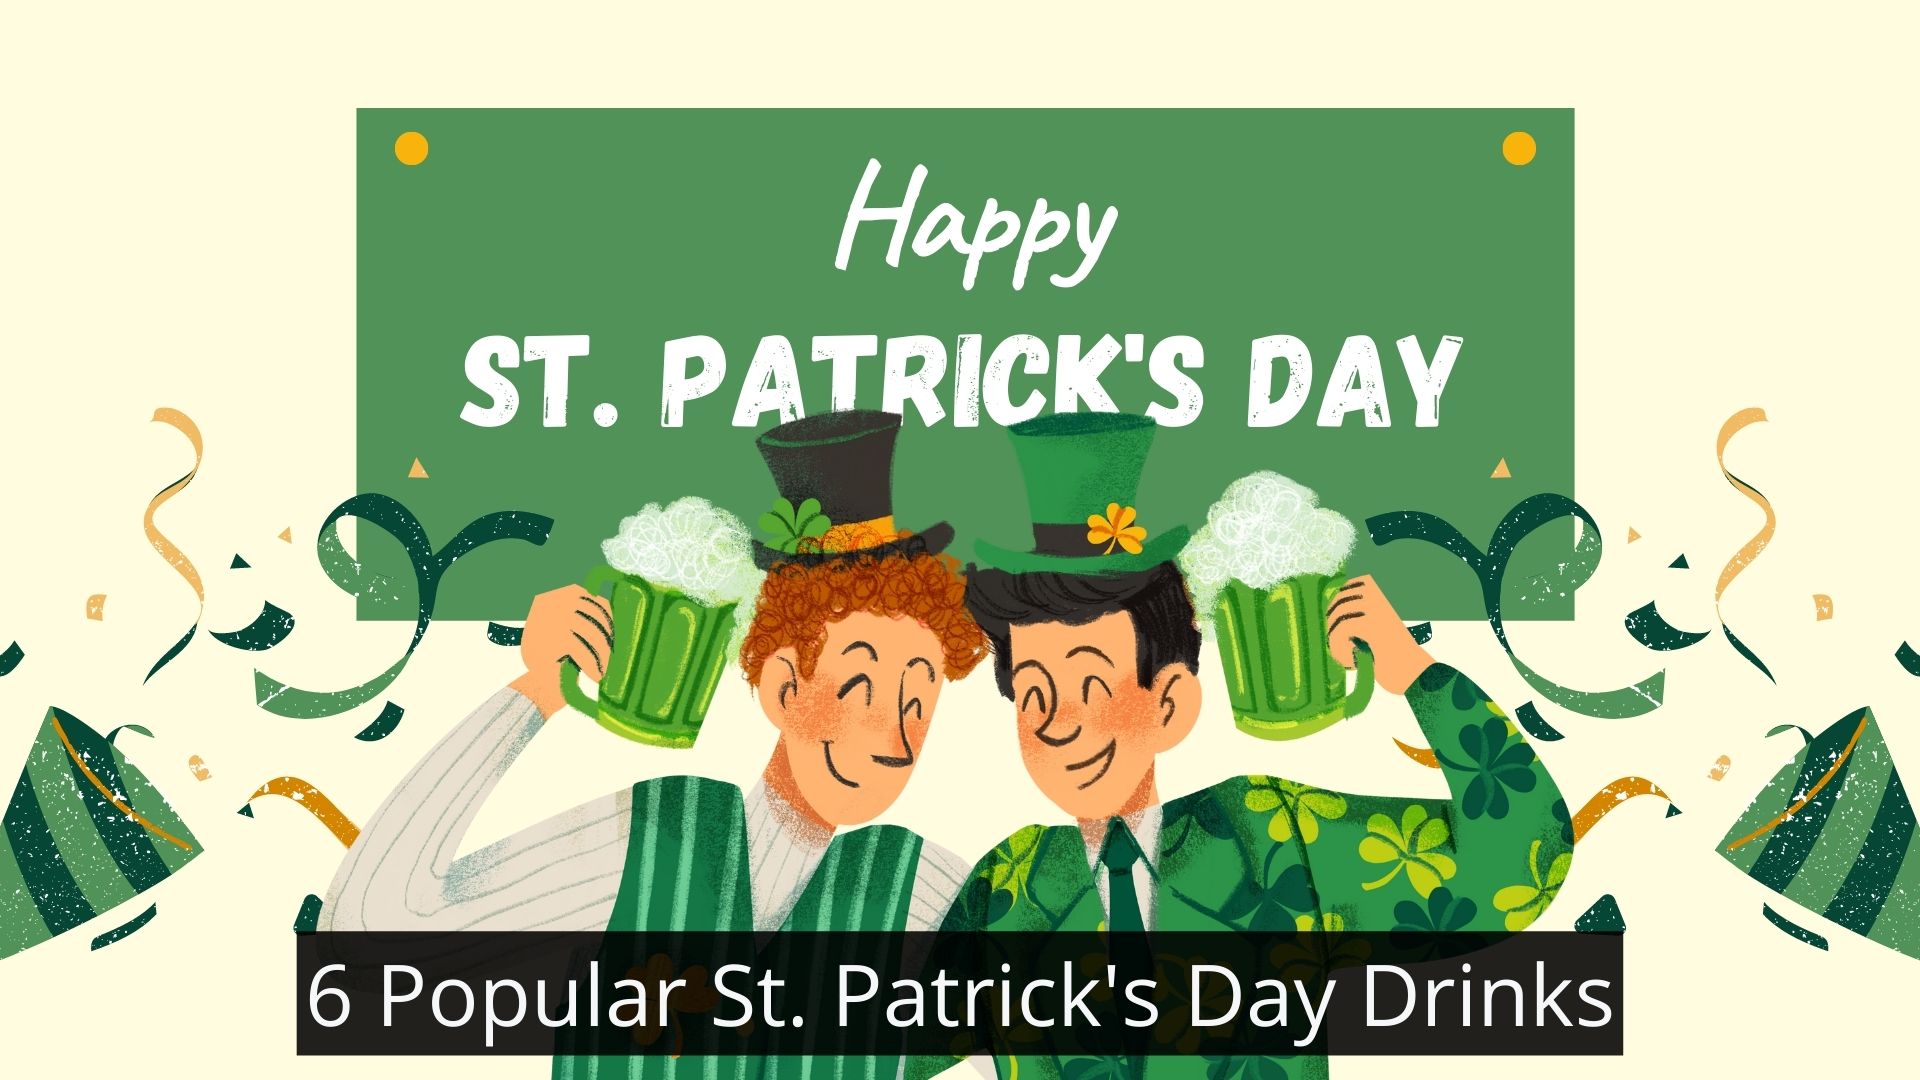 6 Popular St. Patrick's Day Drinks